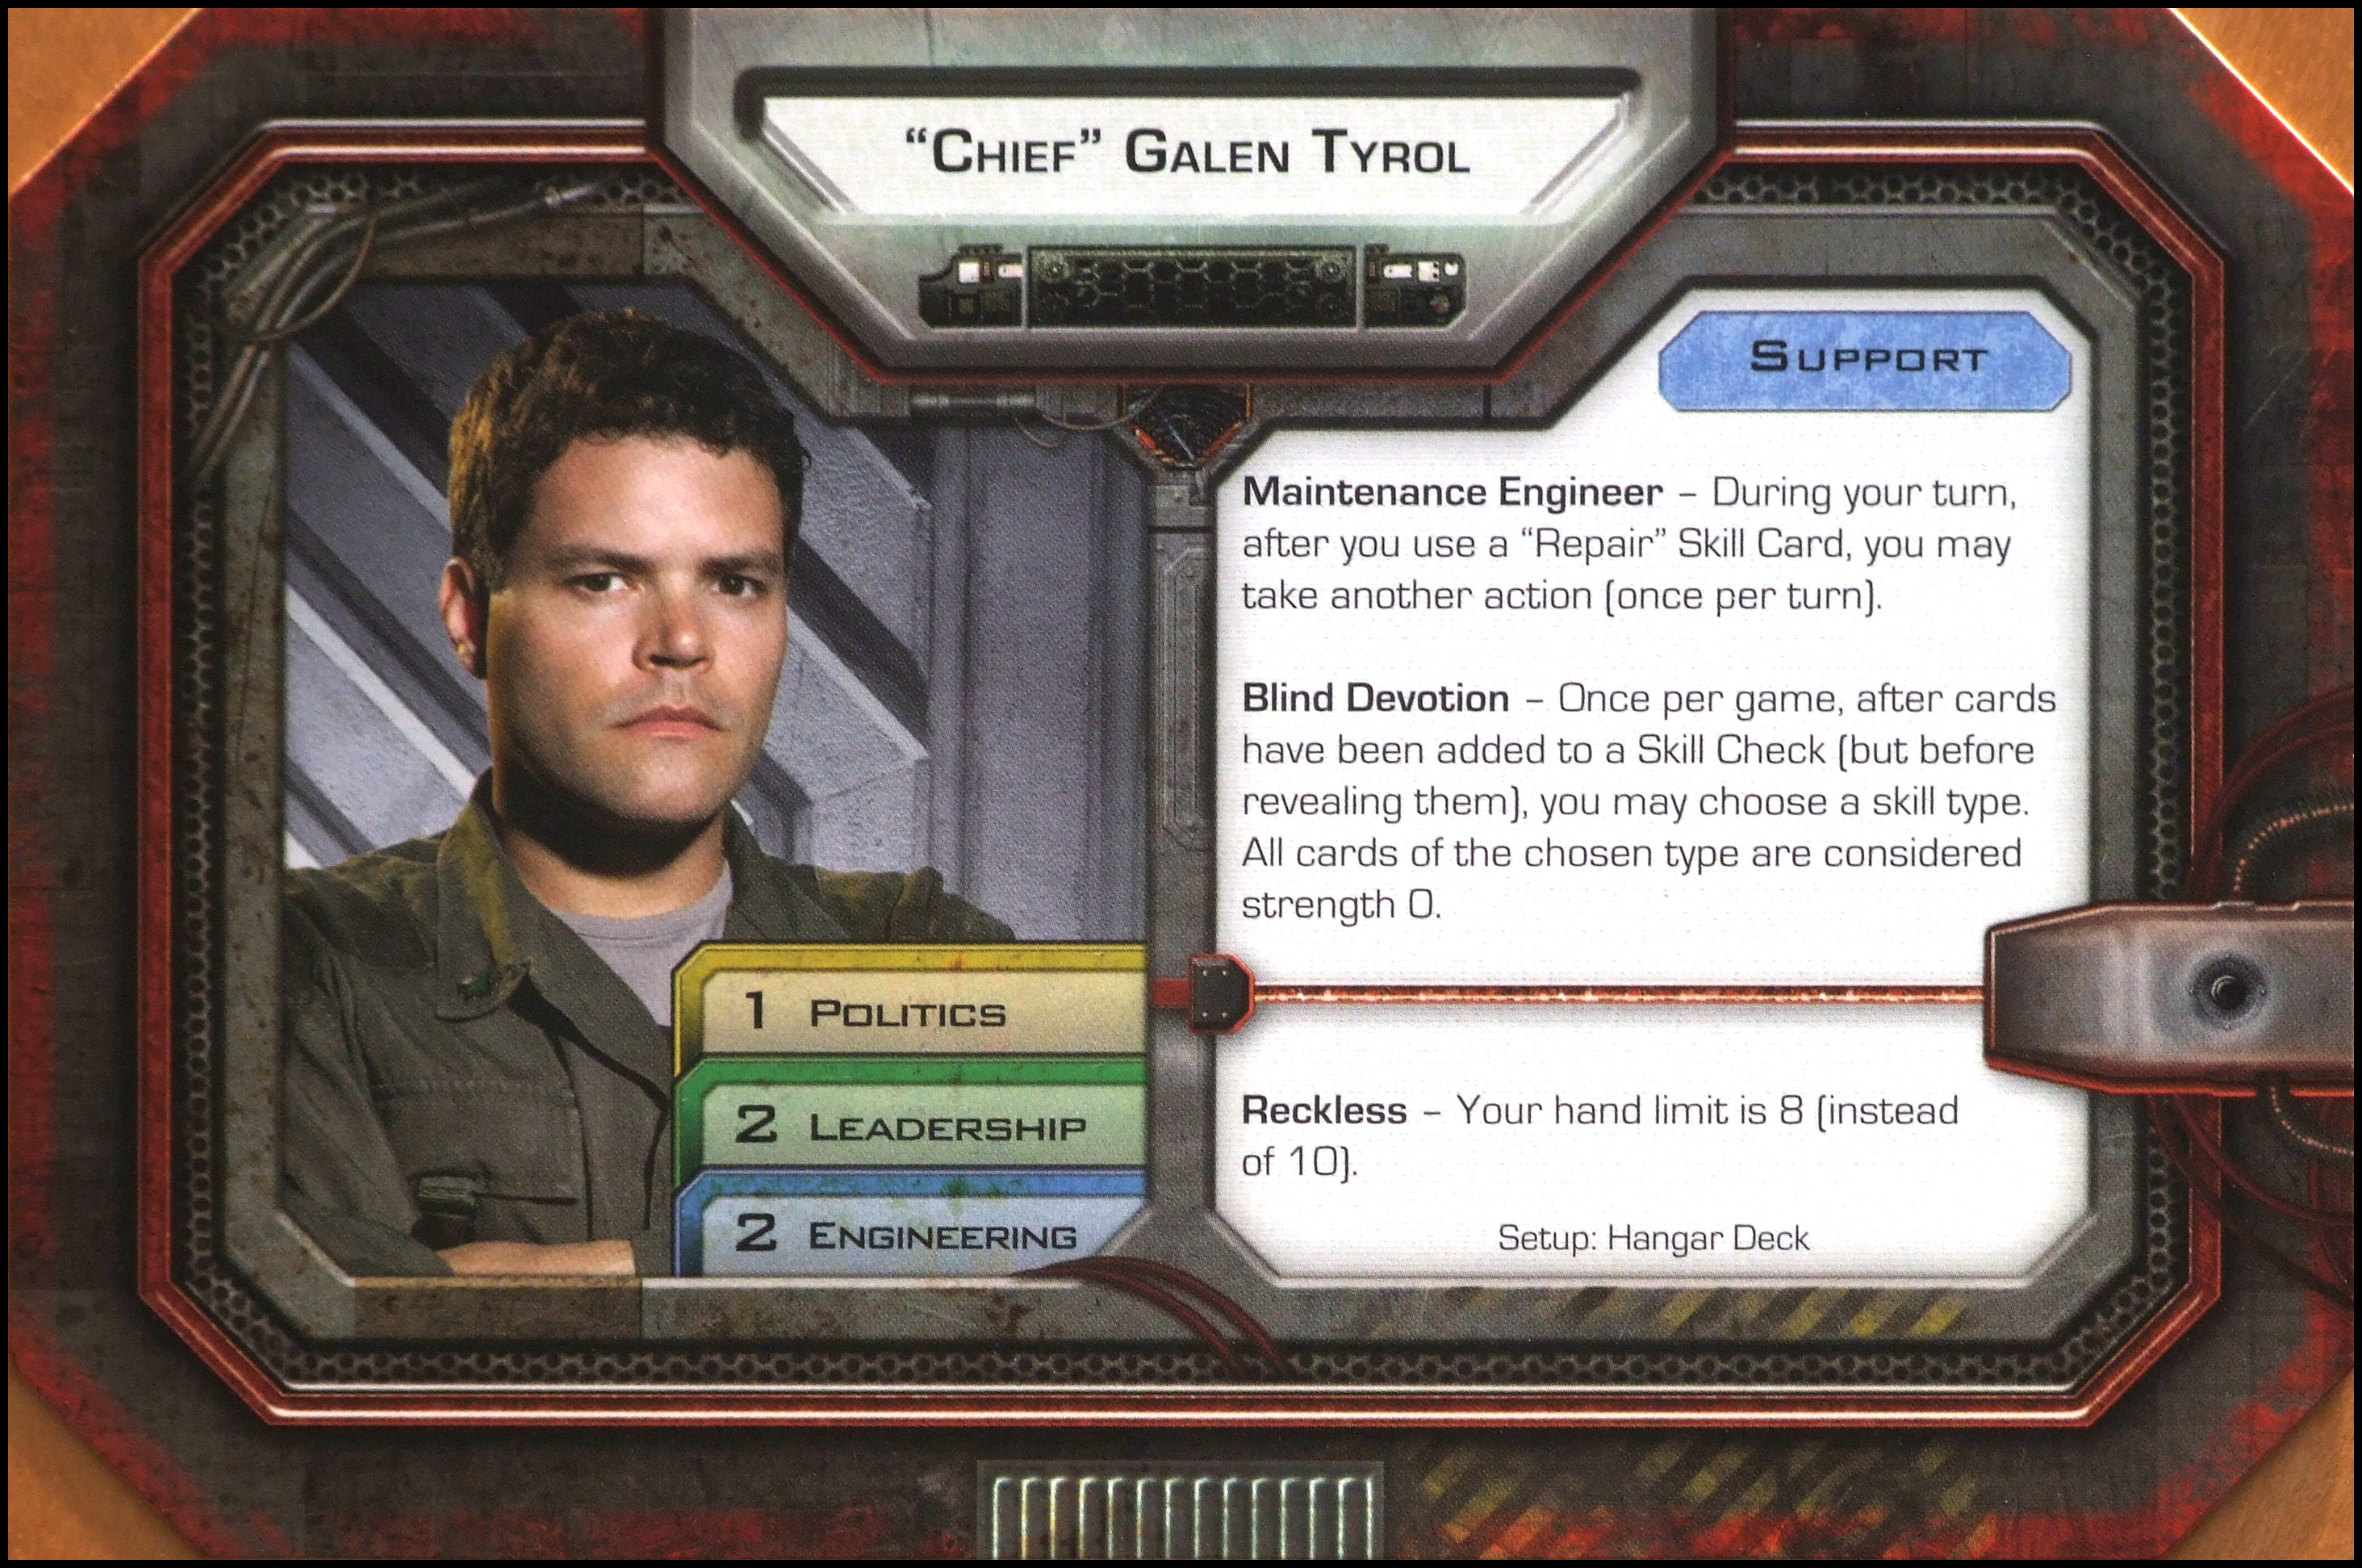 Battlestar Galactica: The Board Game - Galen Tyrol Card